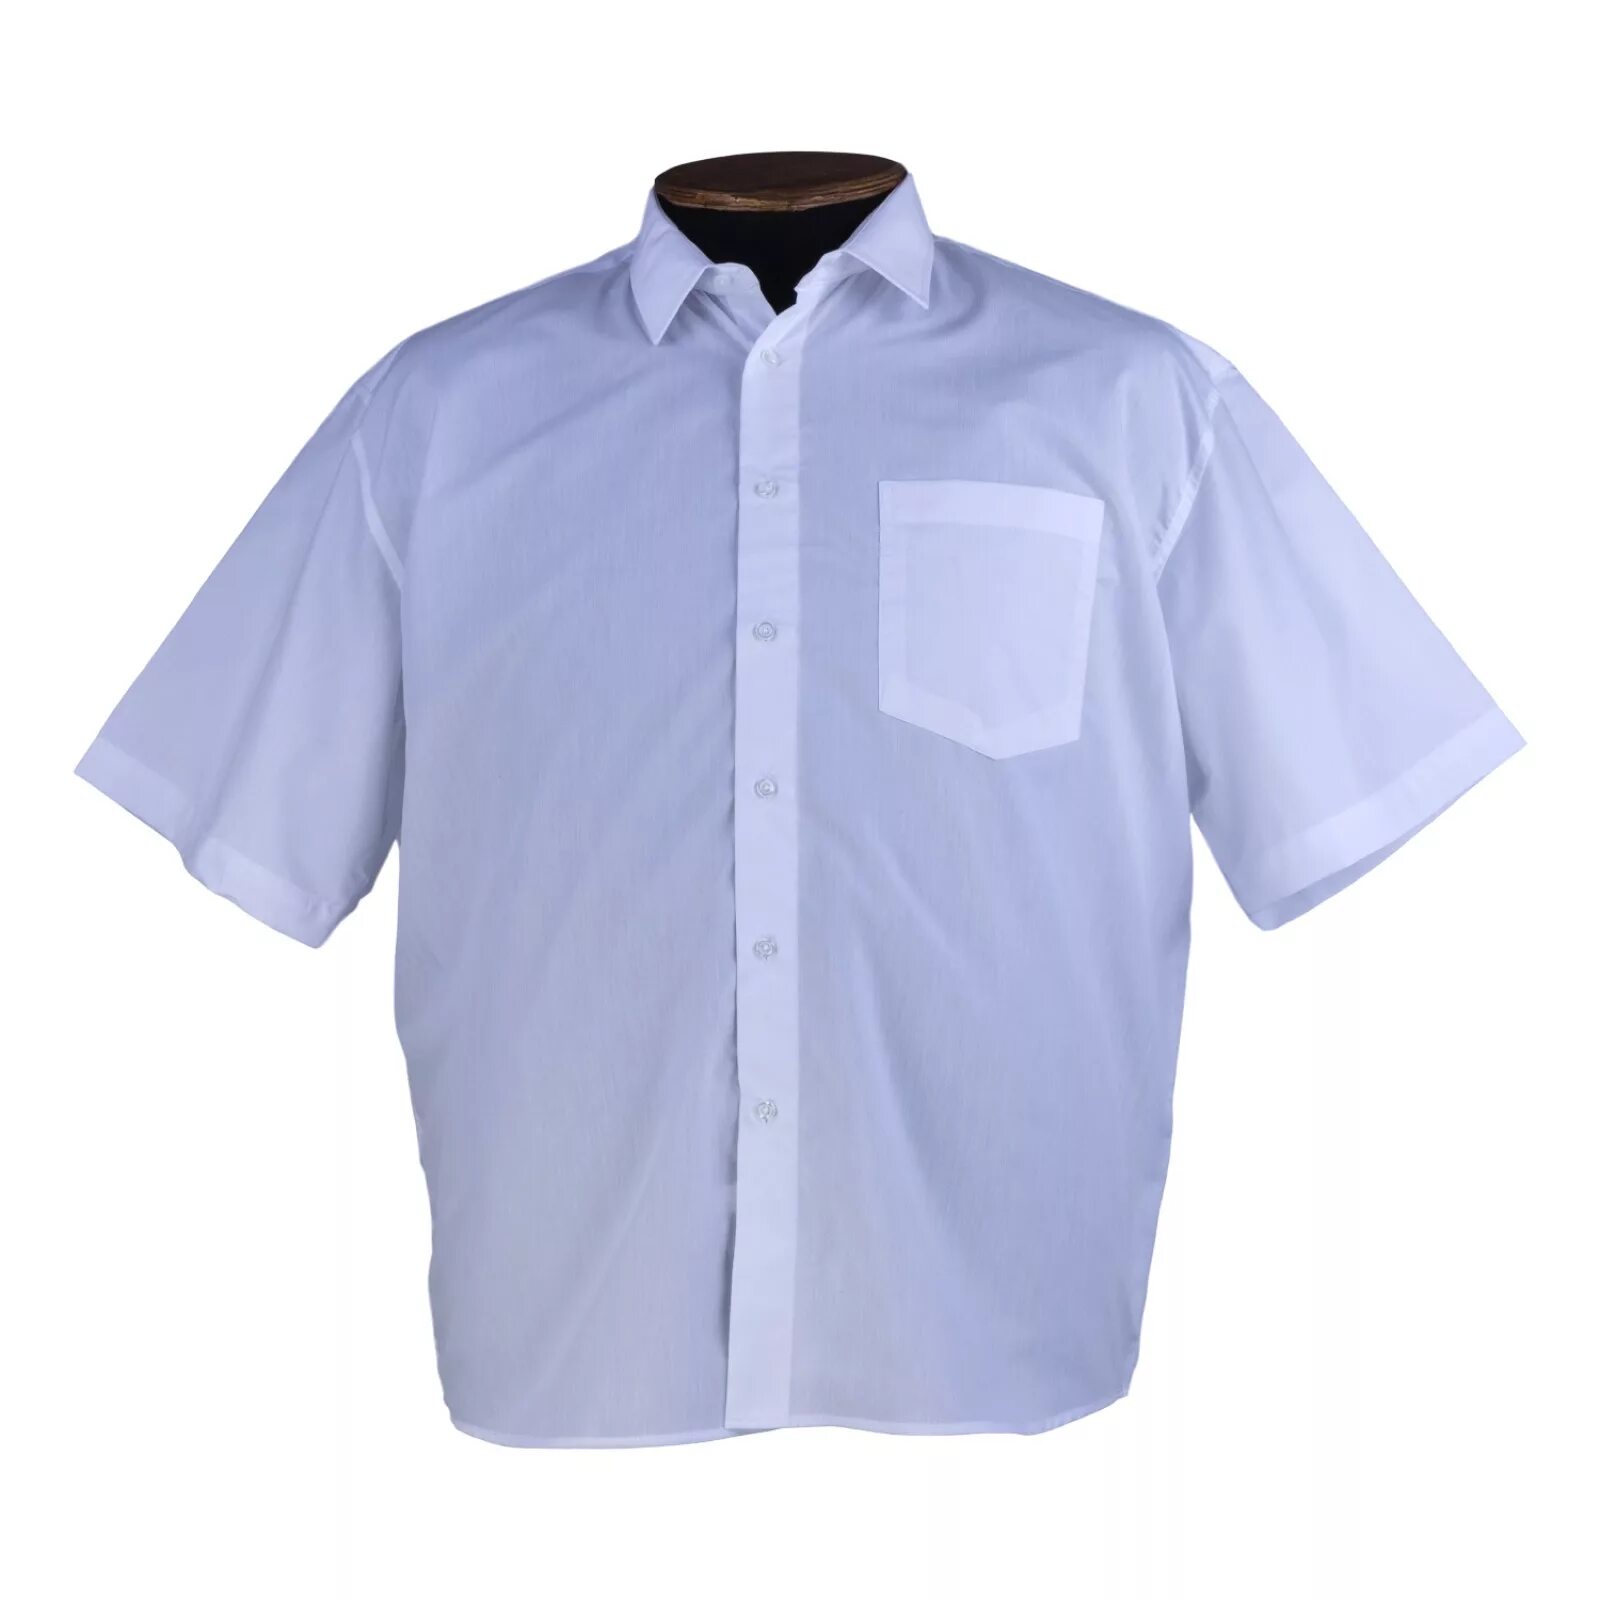 Озон интернет магазин рубашки. Рубашка мужская mh1081tam. Рубашка мужская поло Pentagon. Springfield Linen est1988 рубашка мужская. Рубашка с коротким рукавом мужская.